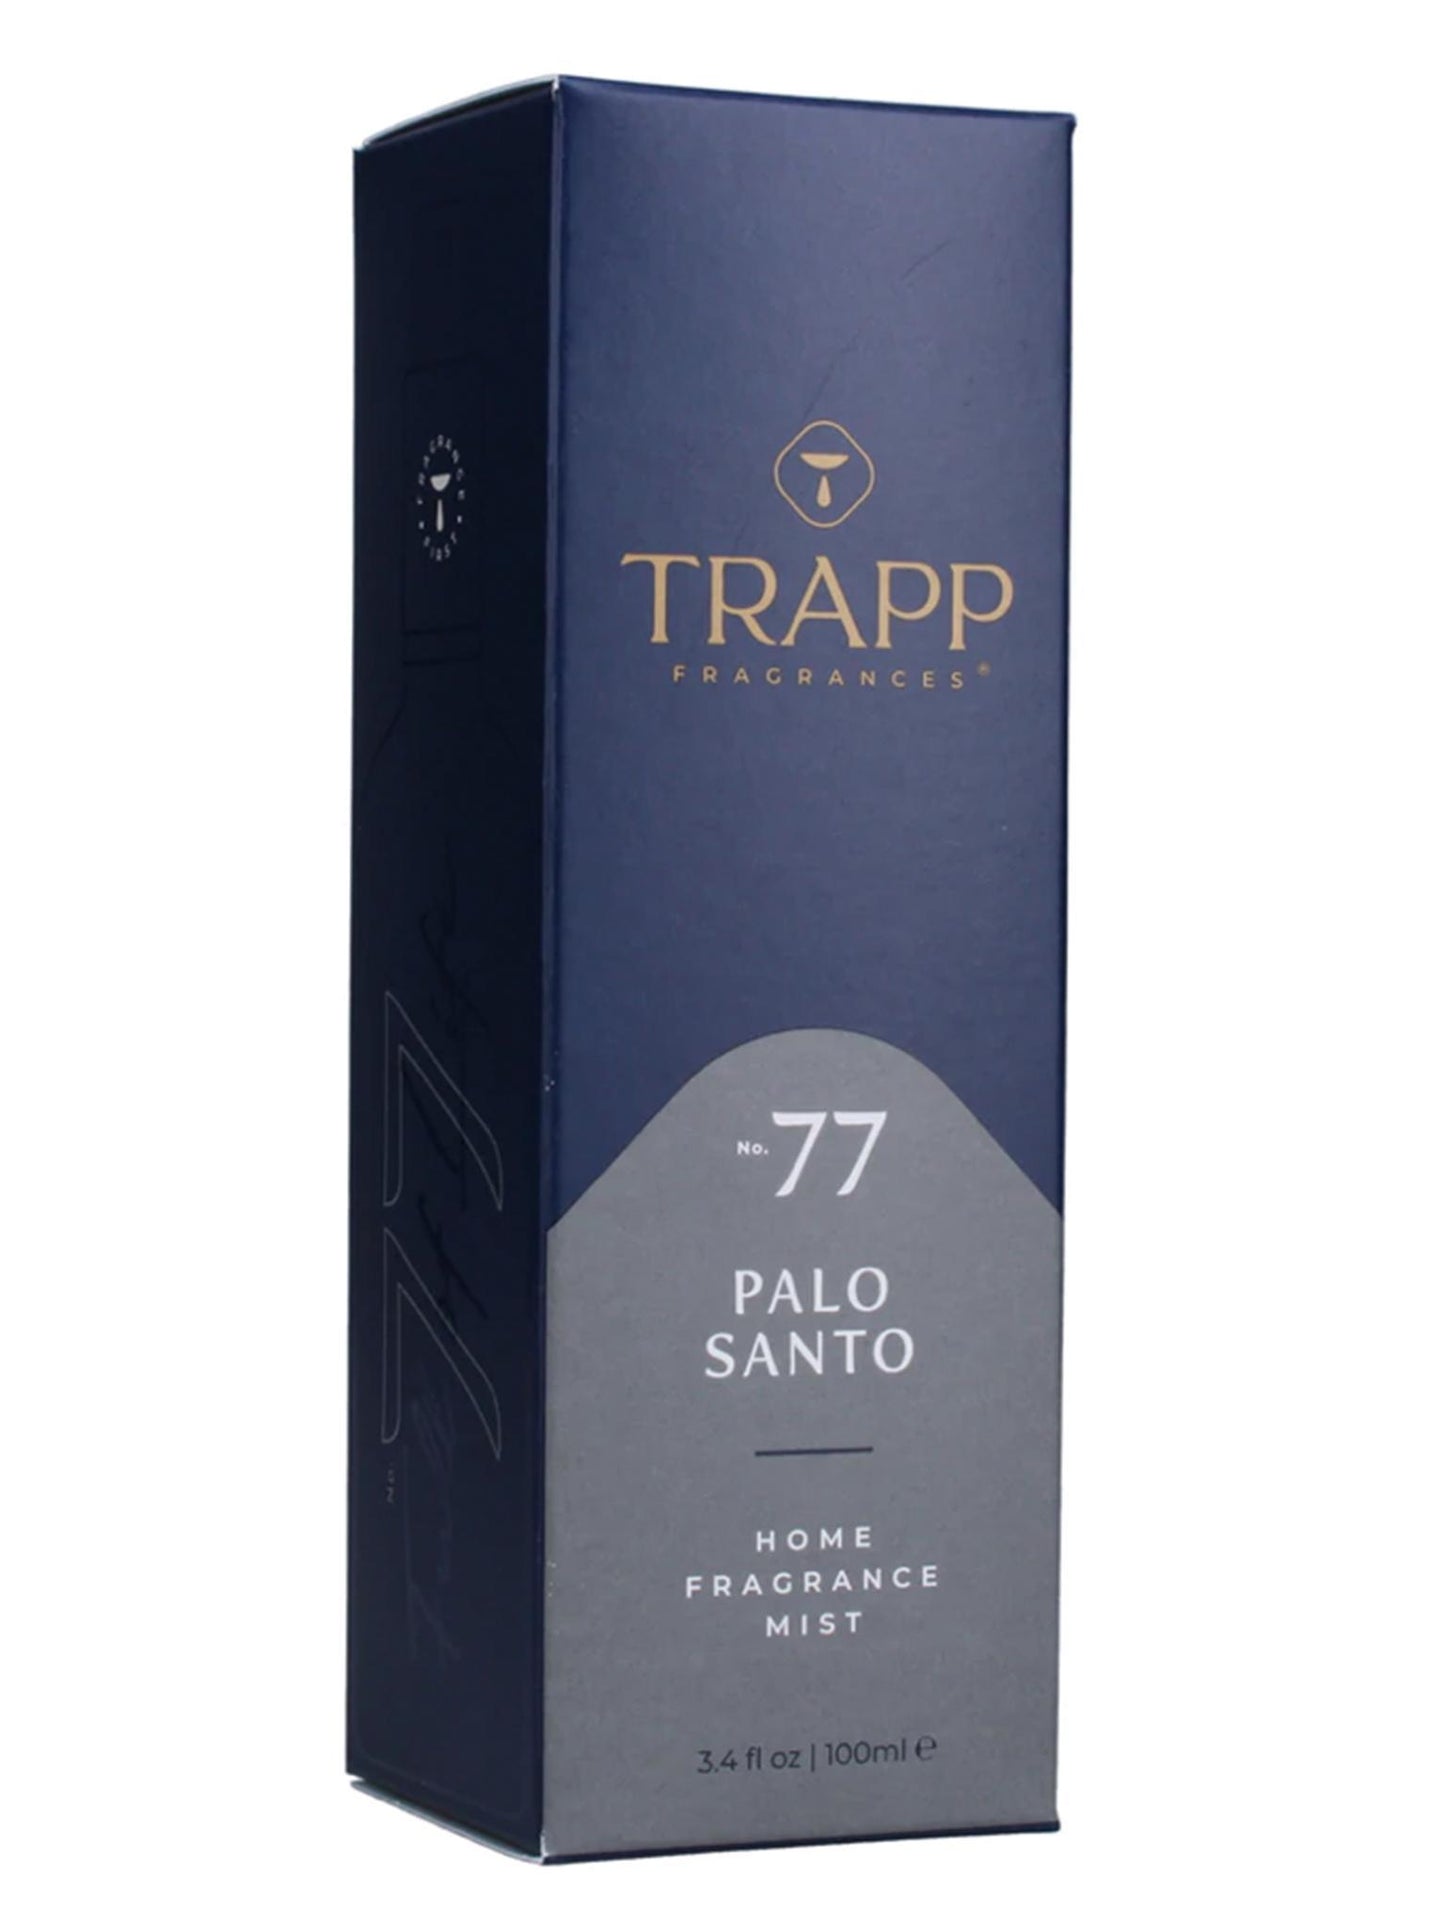 Trapp Wild Currant Fragrance Mist Room Spray No. 24